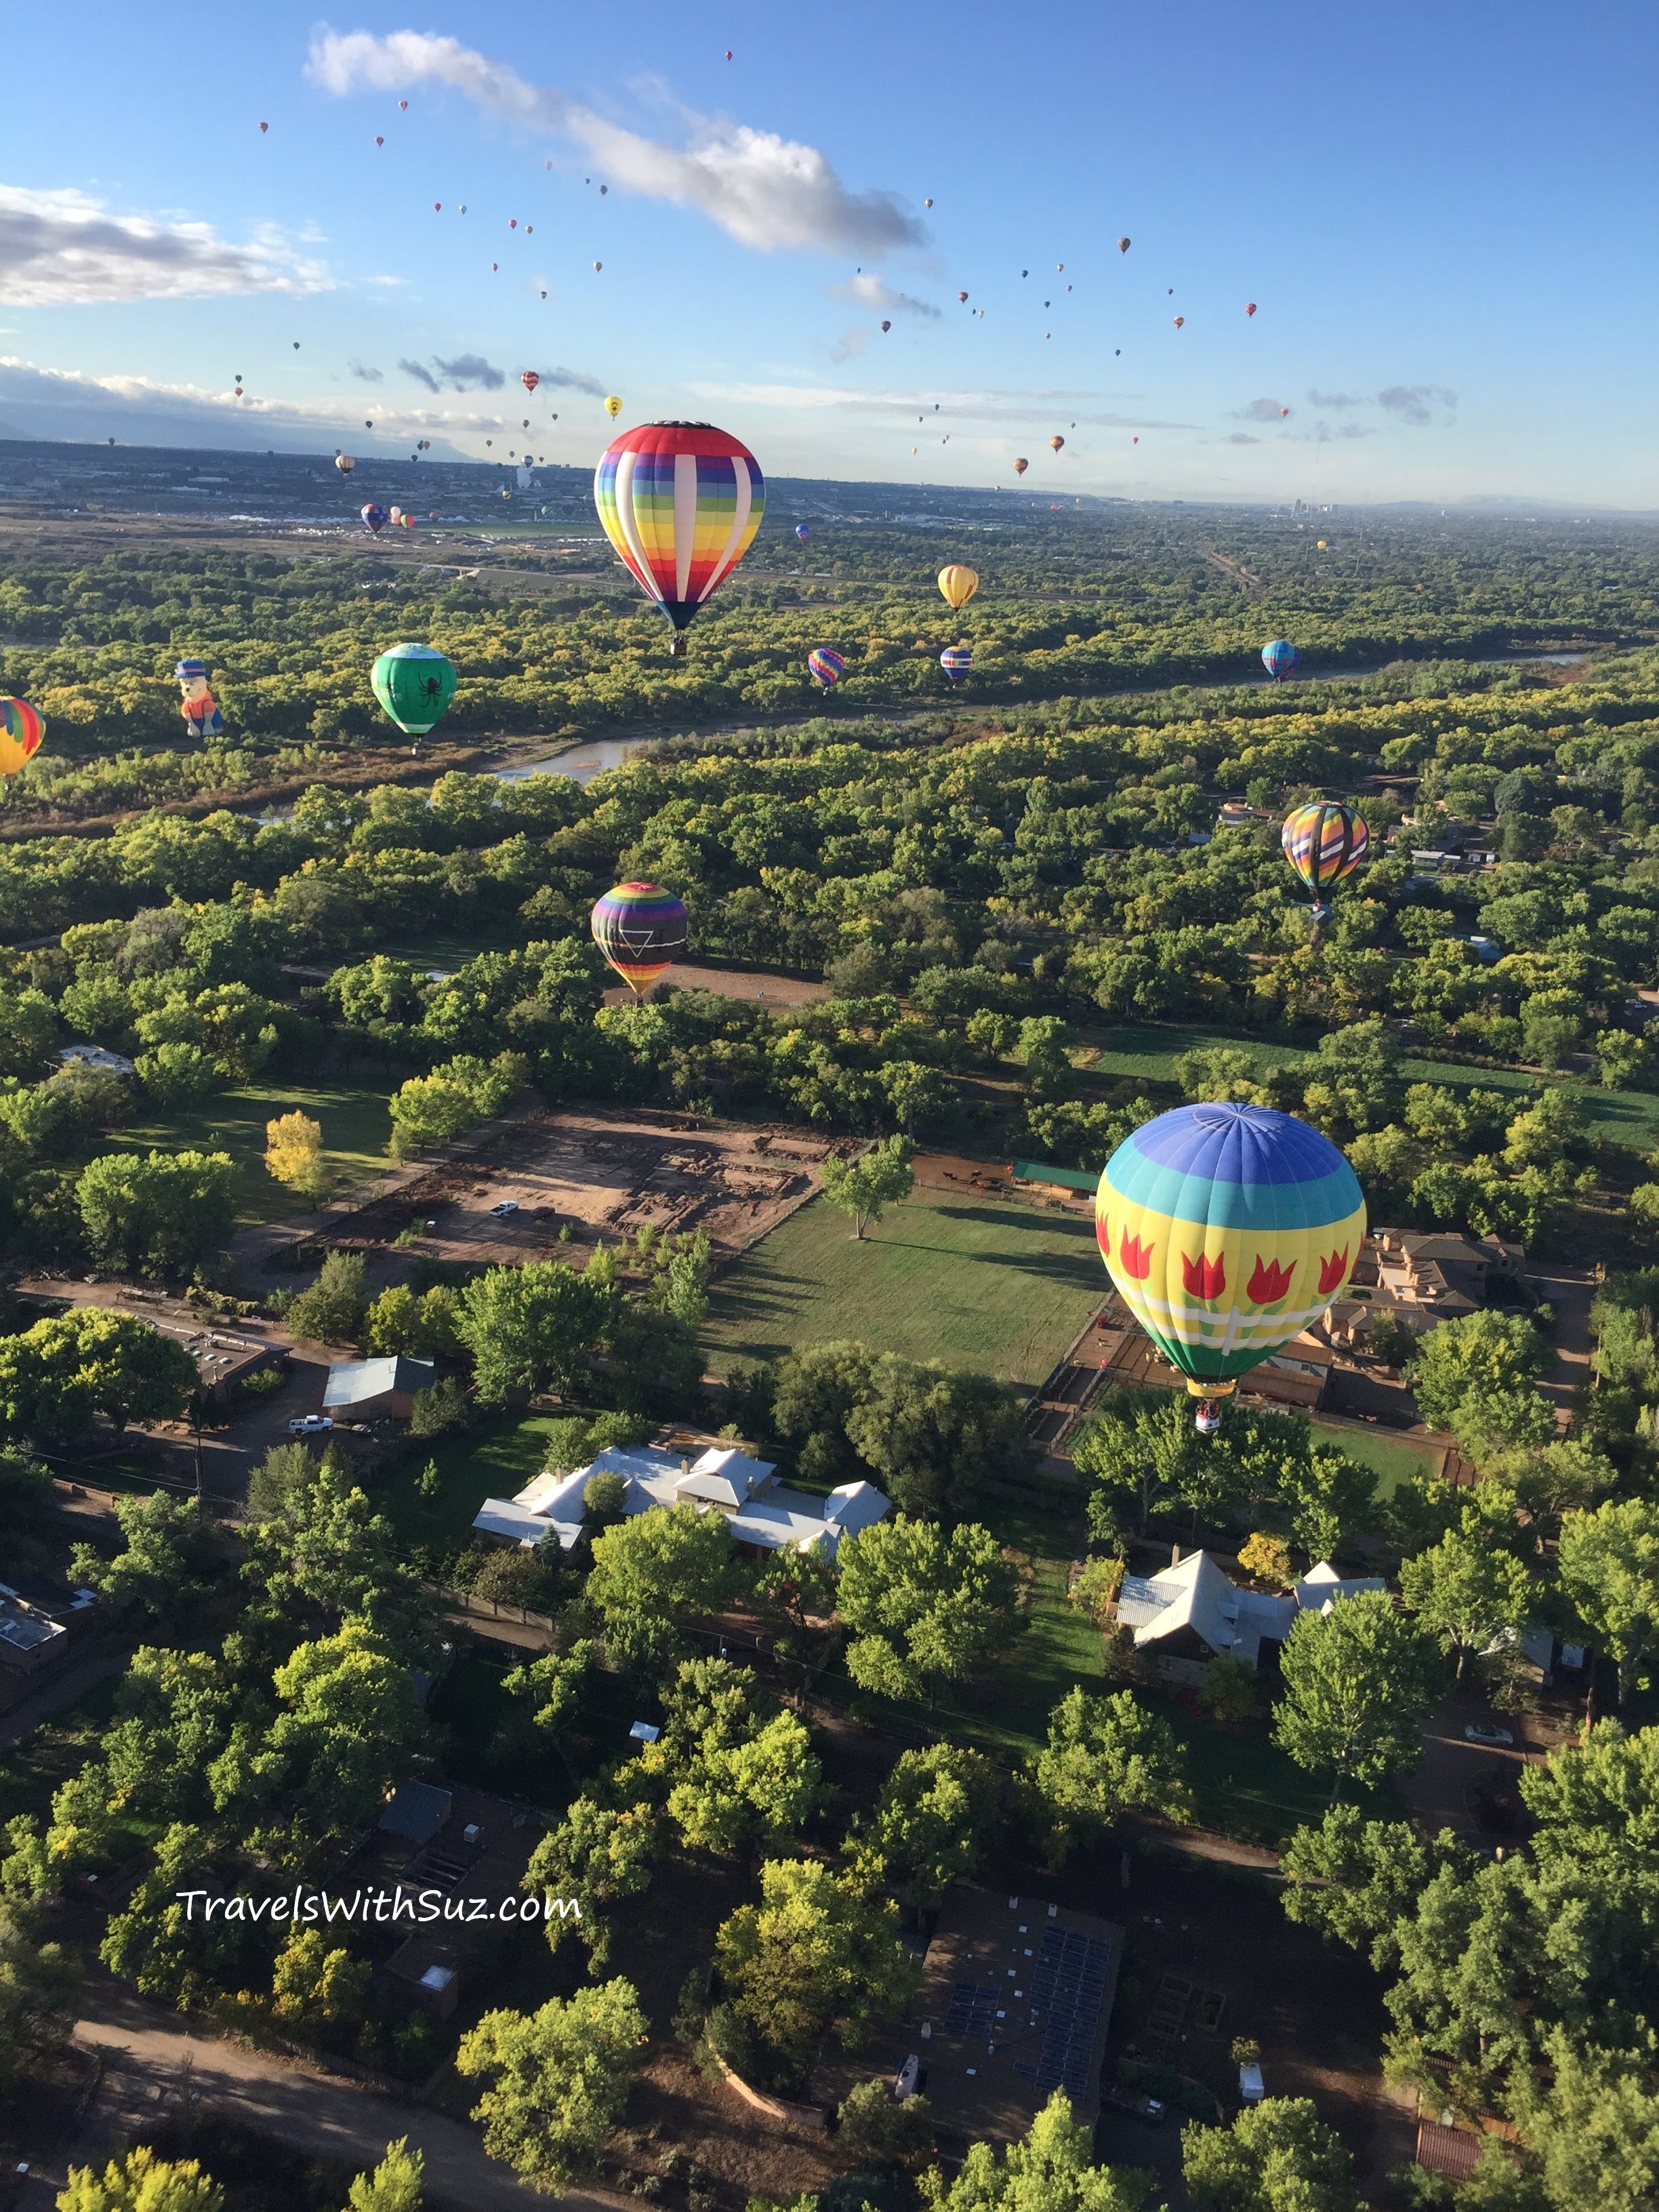  - Albuquerque International Balloon Fiesta - TravelsWithSuz.com